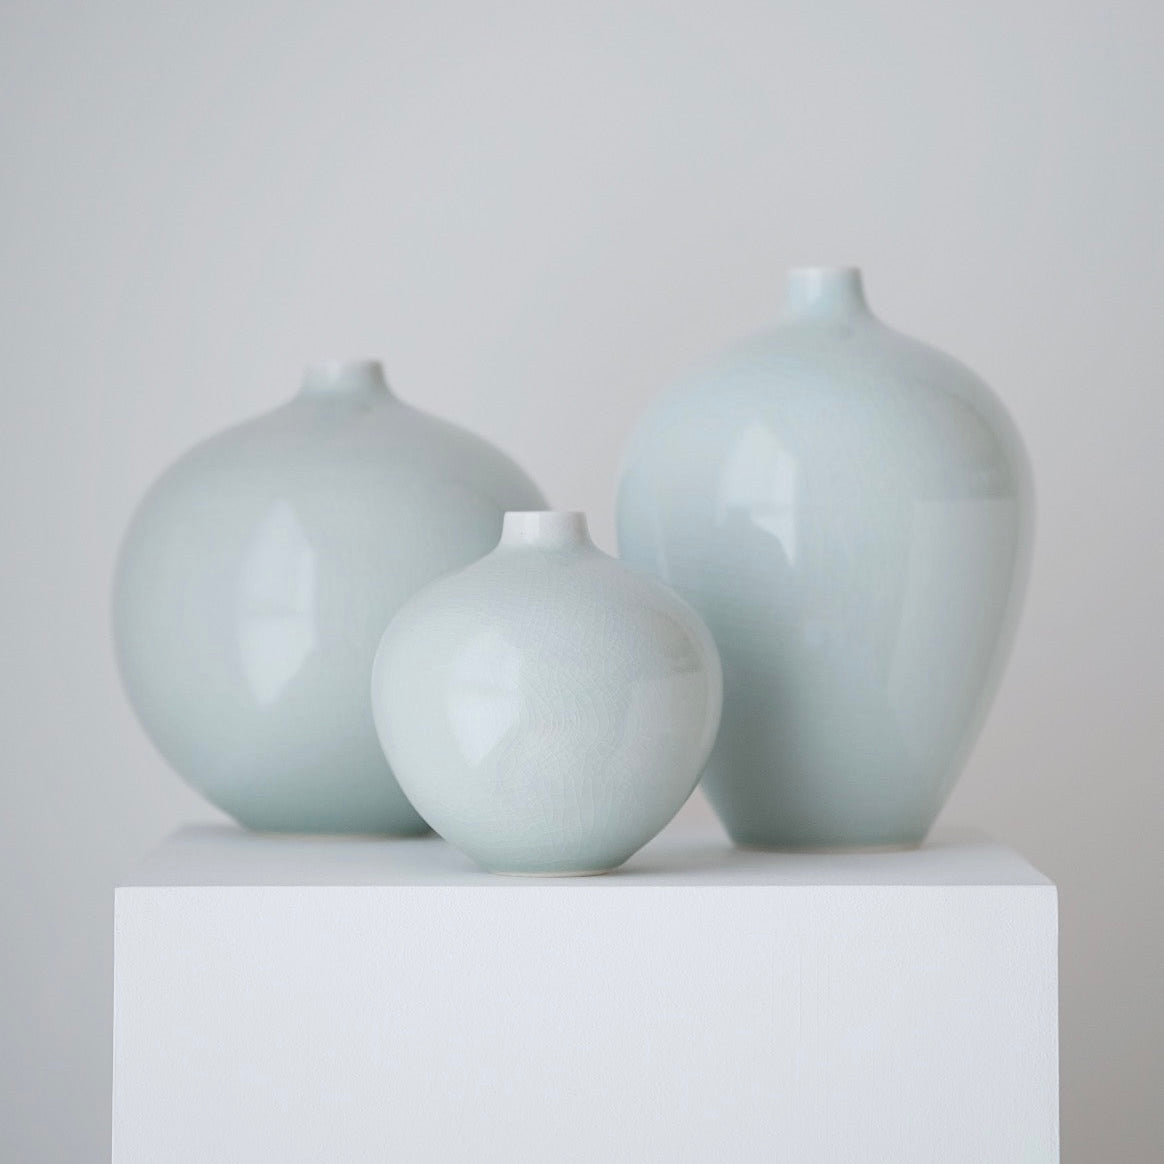 Light-Chungja(연청자) Vase - Small